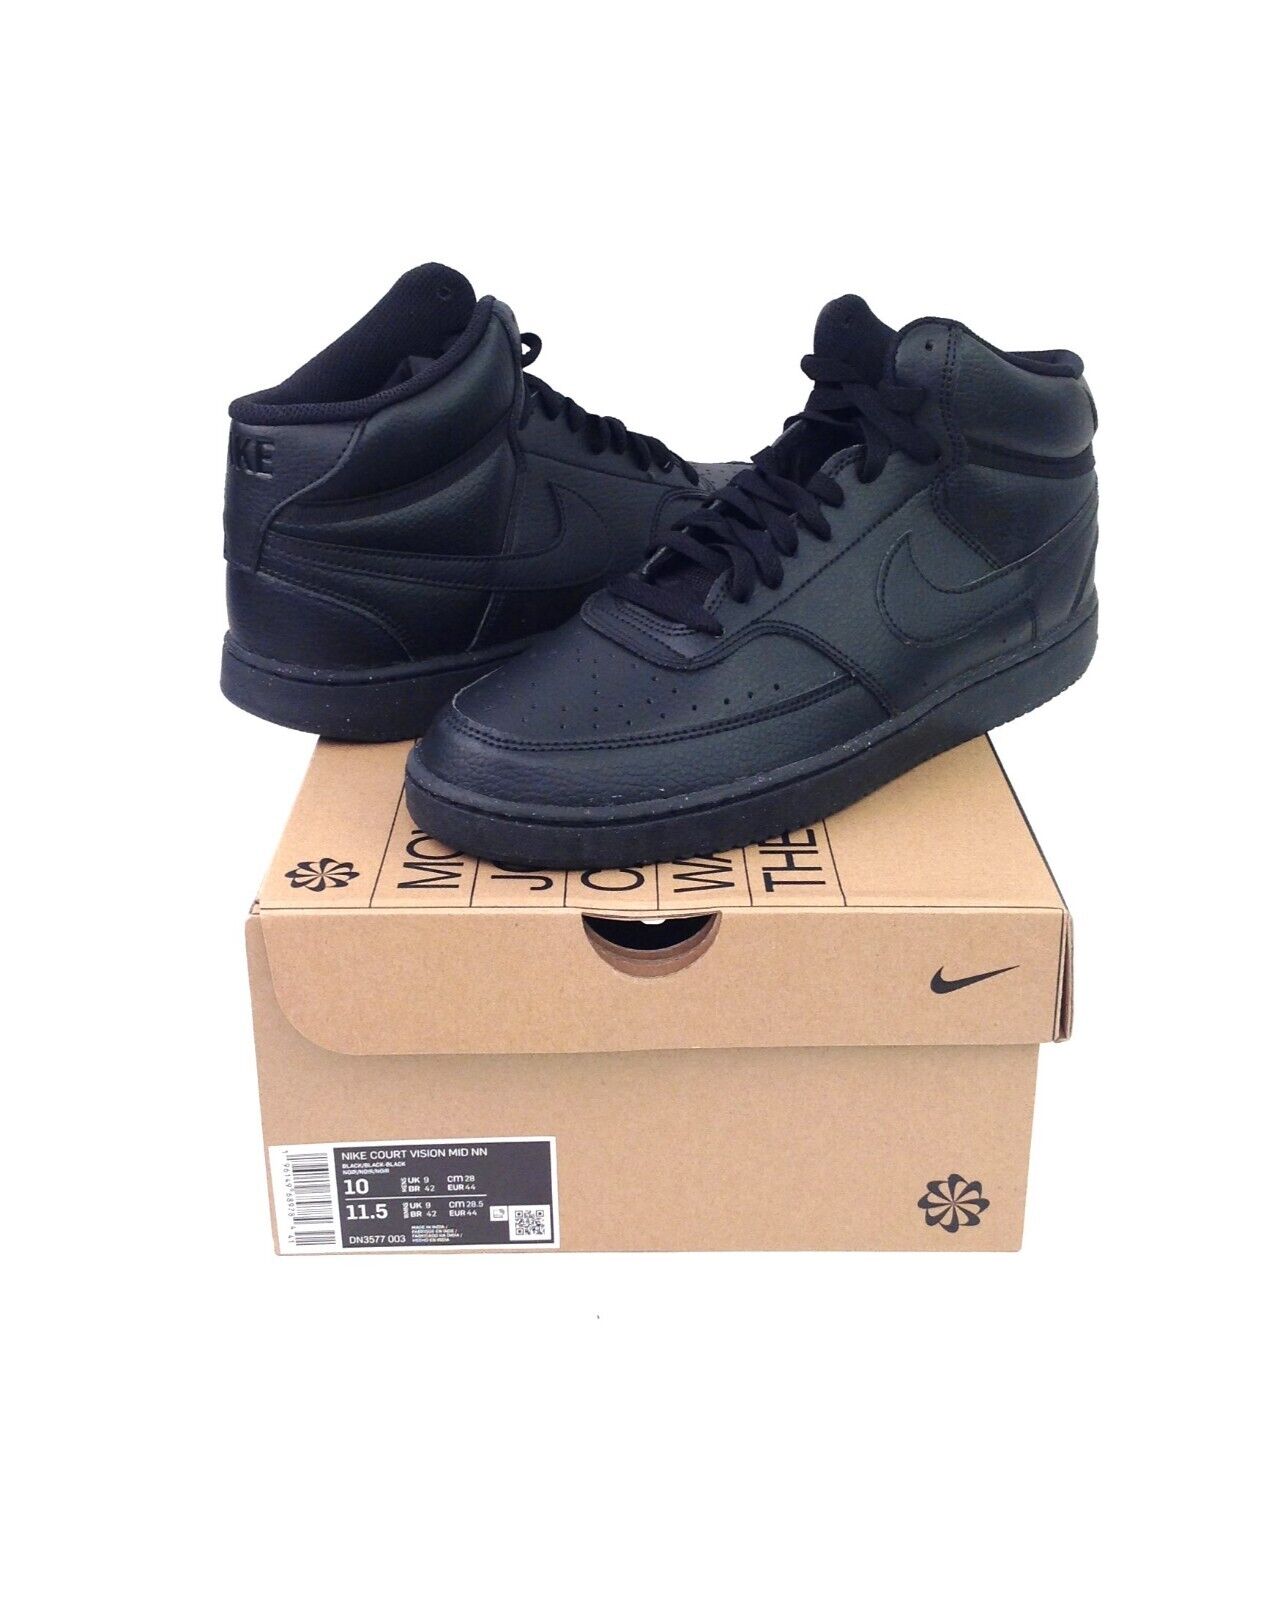 Unbelievable Nike Mens Court Vision Mid Black/Black NN Basketball Shoes, DN3577-003, Size 11 on eBay